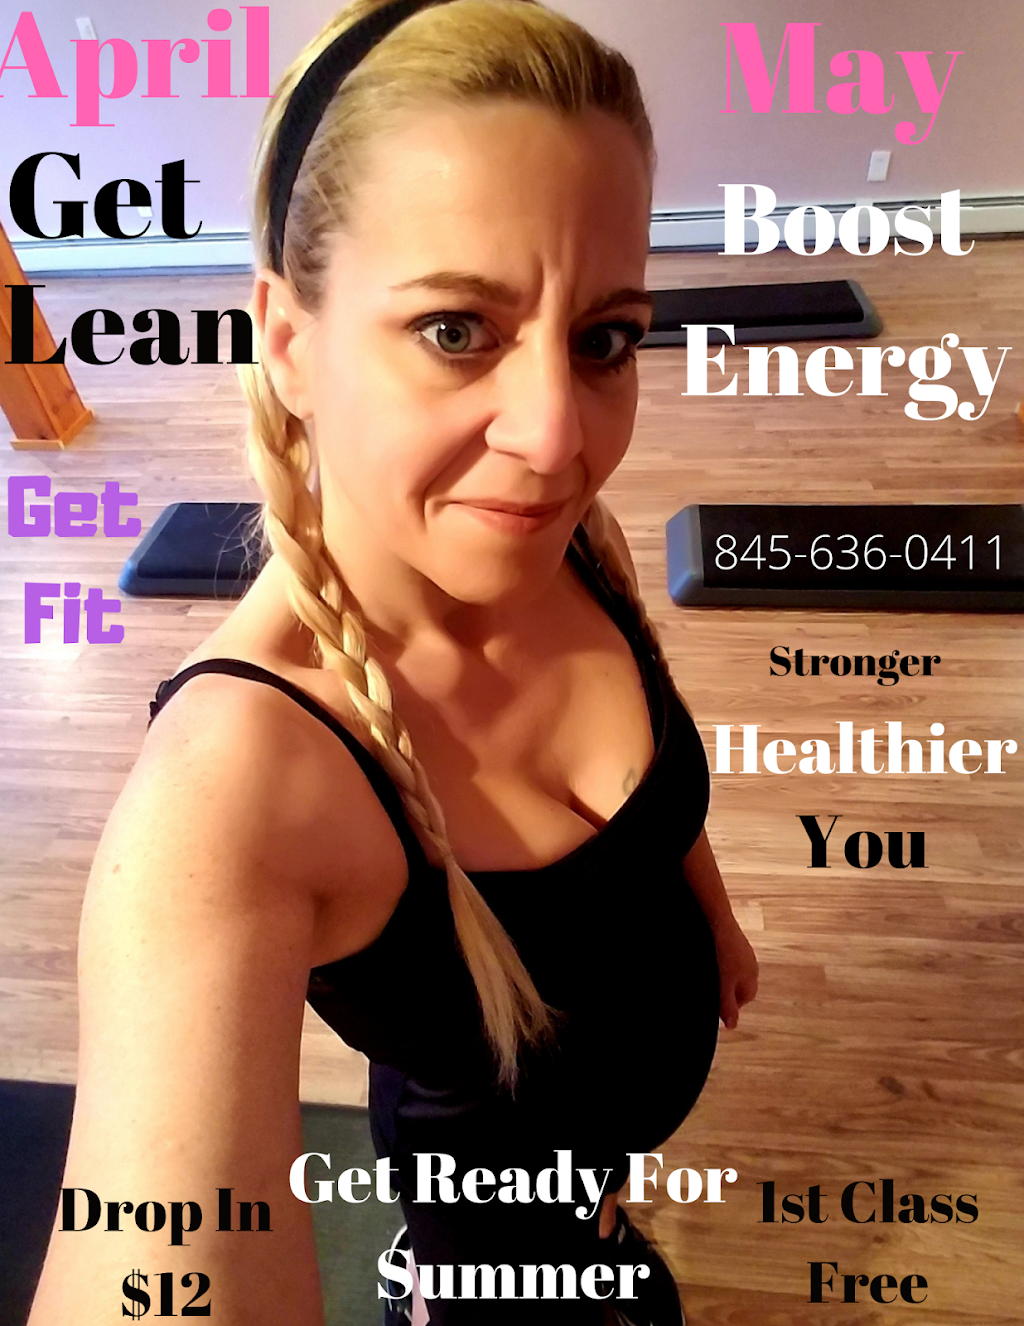 A Healthier You Center | A Healthier You Studio 2235, NY-208, Montgomery, NY 12549 | Phone: (845) 636-0411